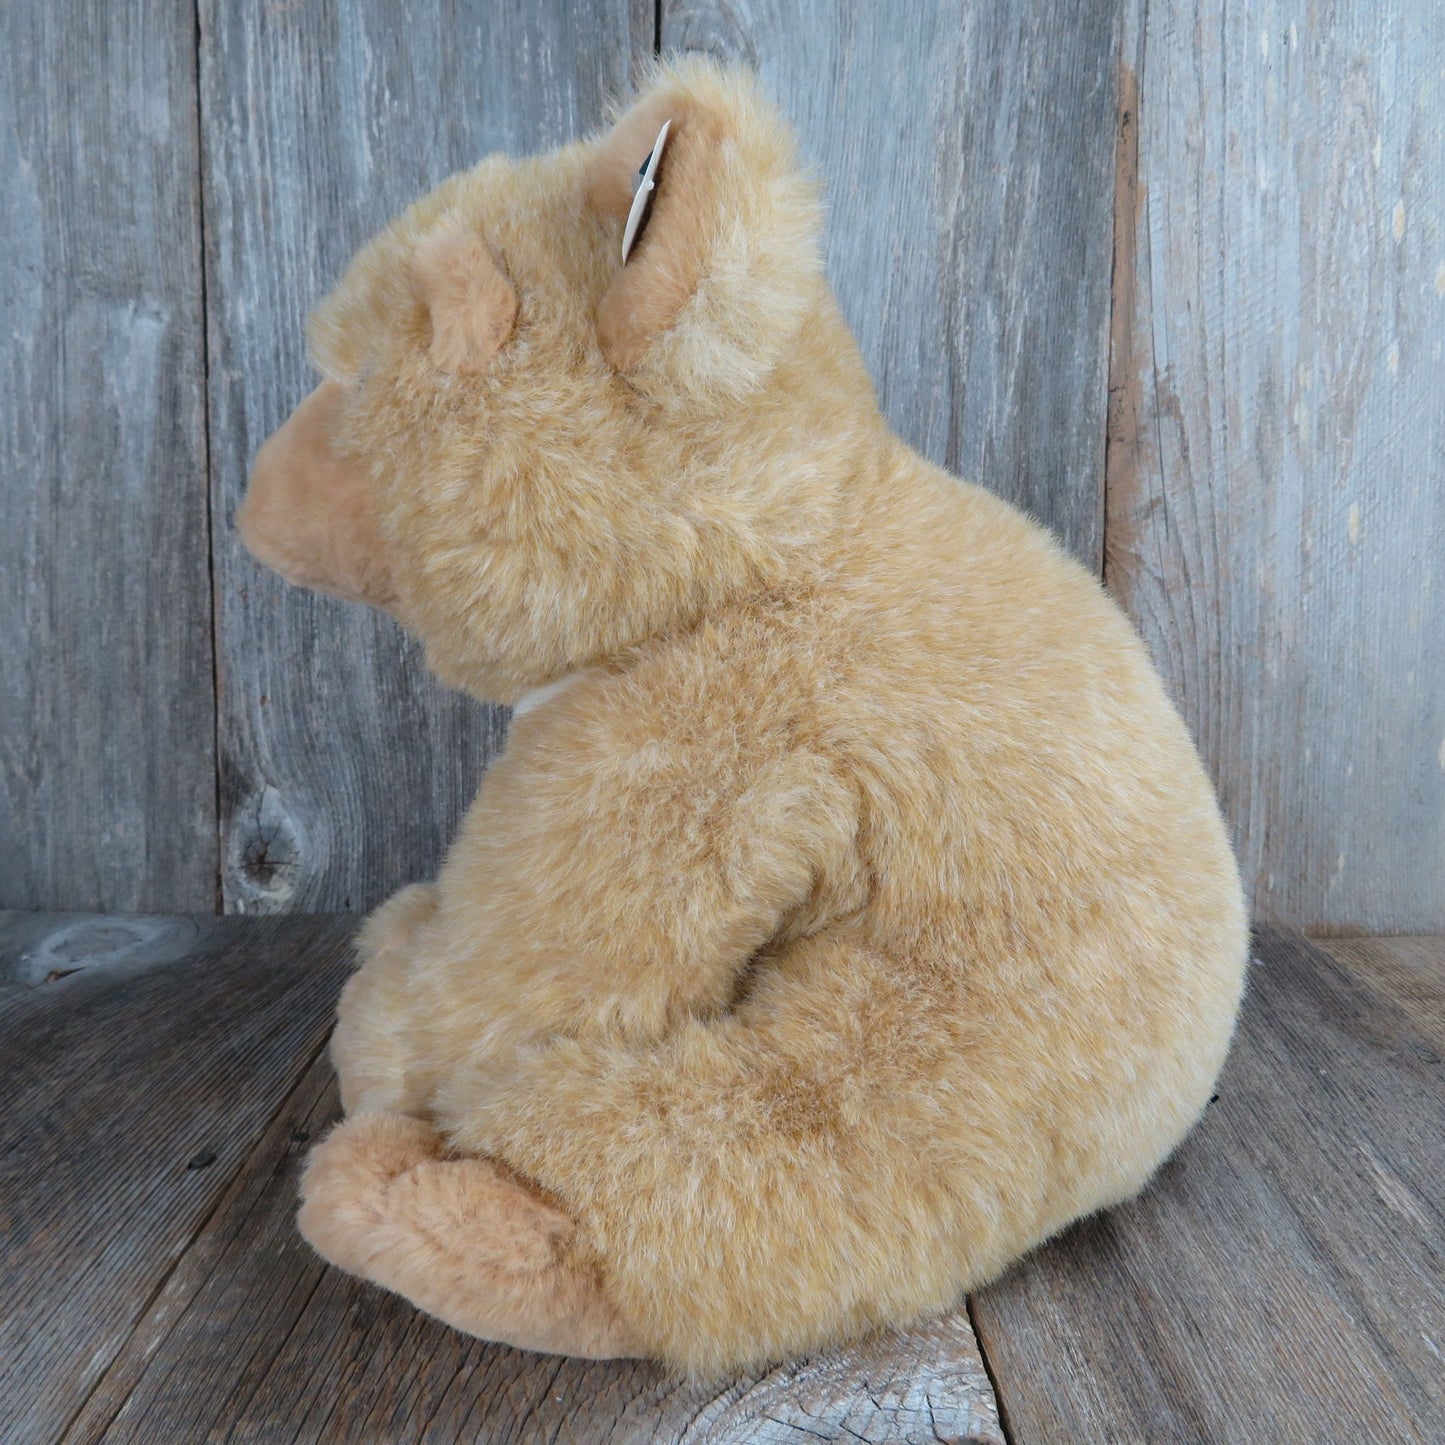 Honey Bear Stuffed Animal Tan Colored Teddy Bear by Gund 1979 Collector's Classic Plush Made in Korea